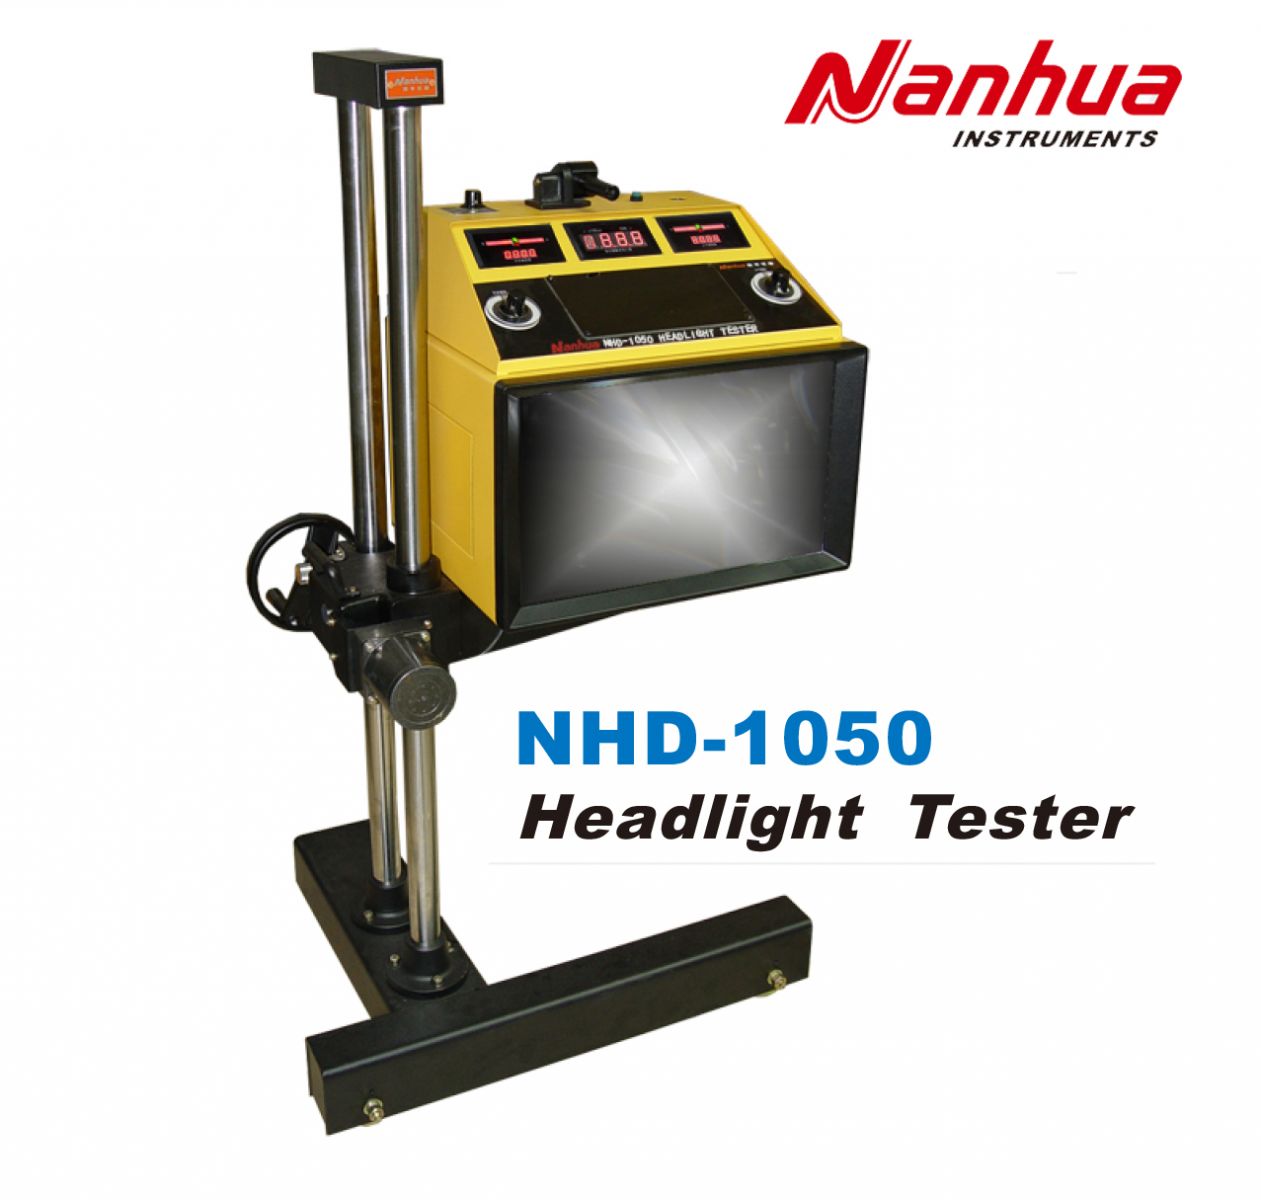 Nanhua NHD-1050 Headlight Tester